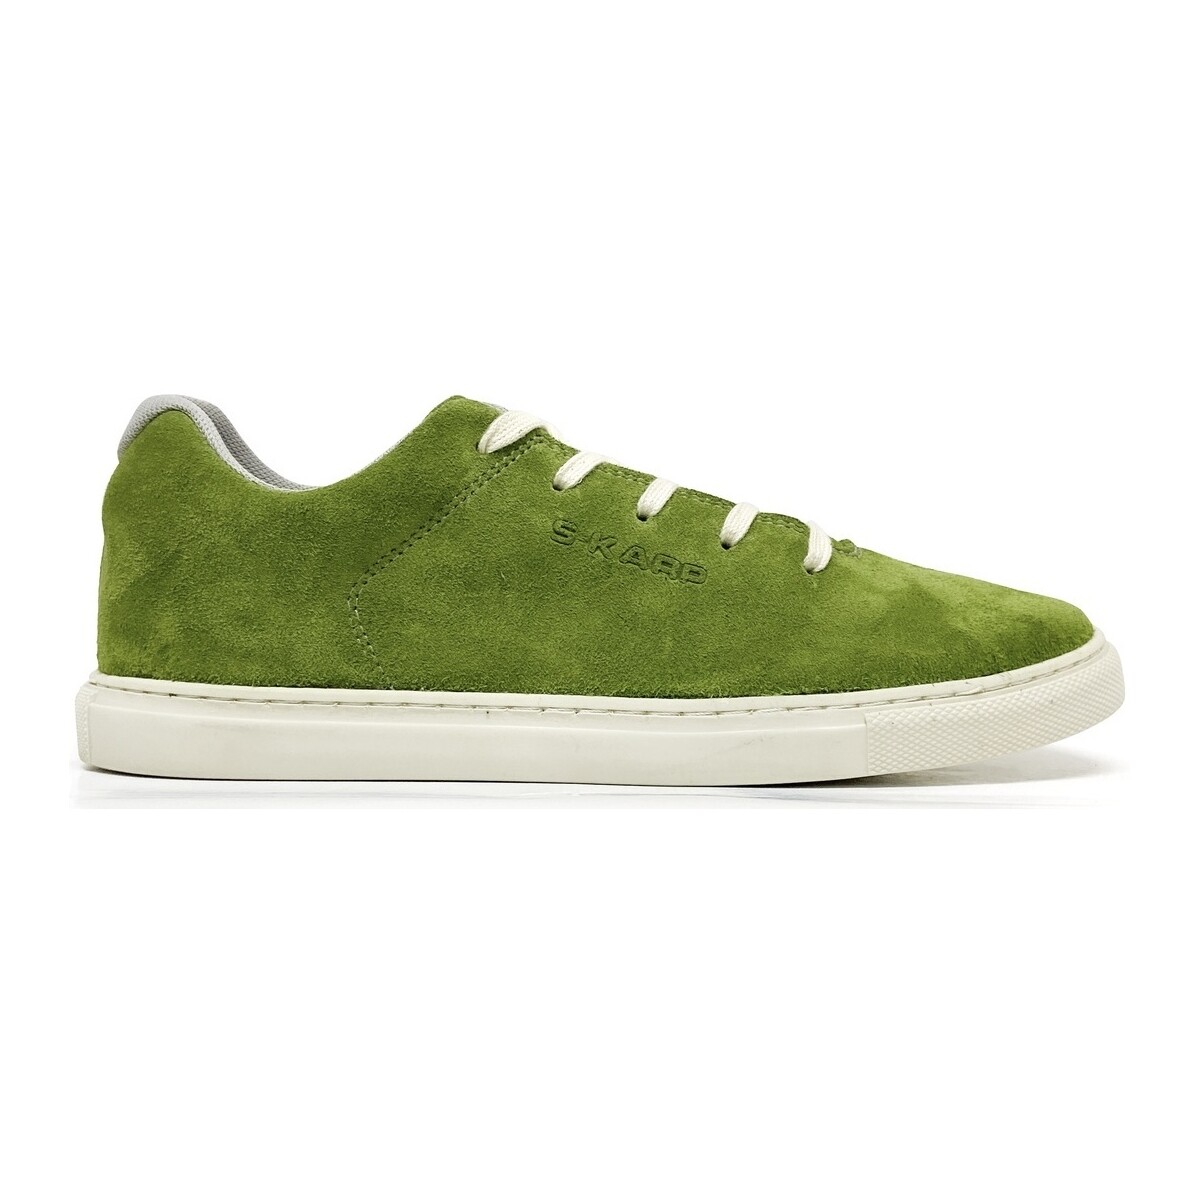 Pantofi Multisport S-Karp Promenade, verde, piele, verde